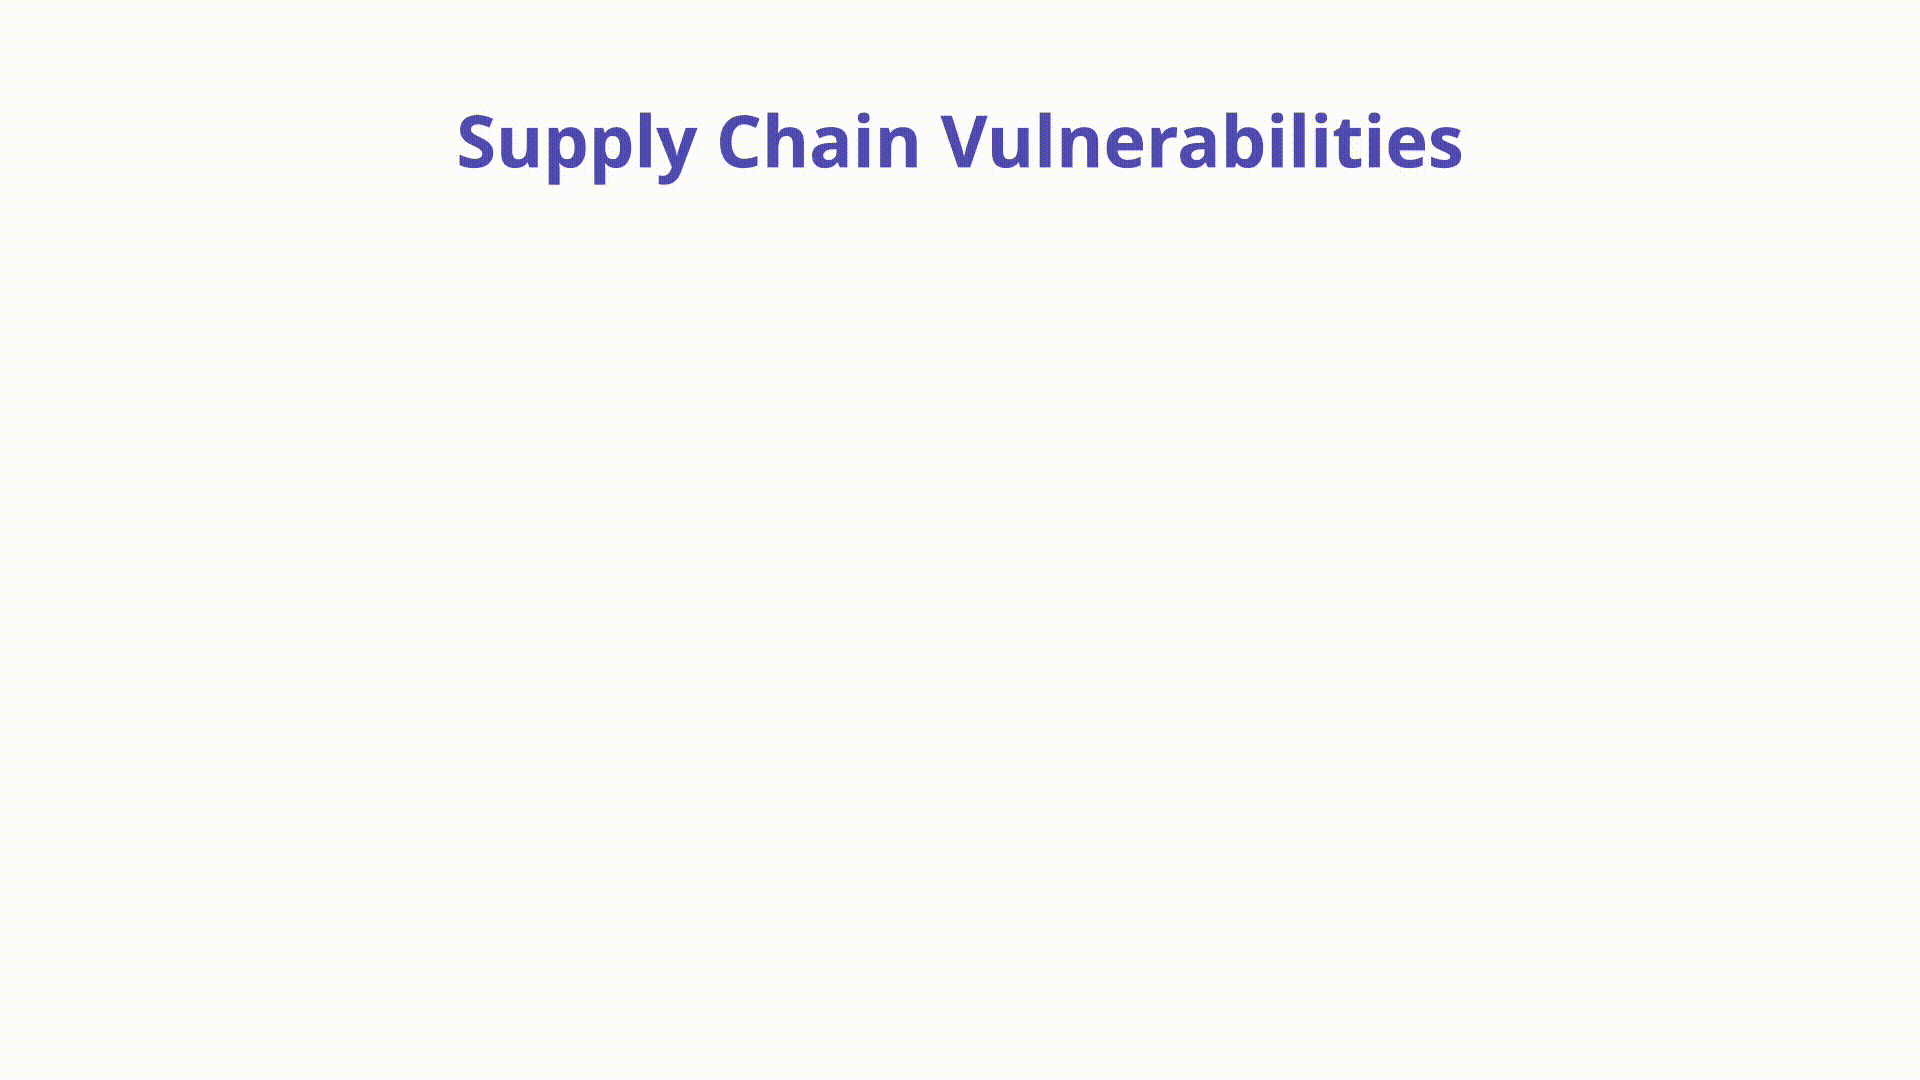 Supply Chain Vulnerabilities -
Illustration